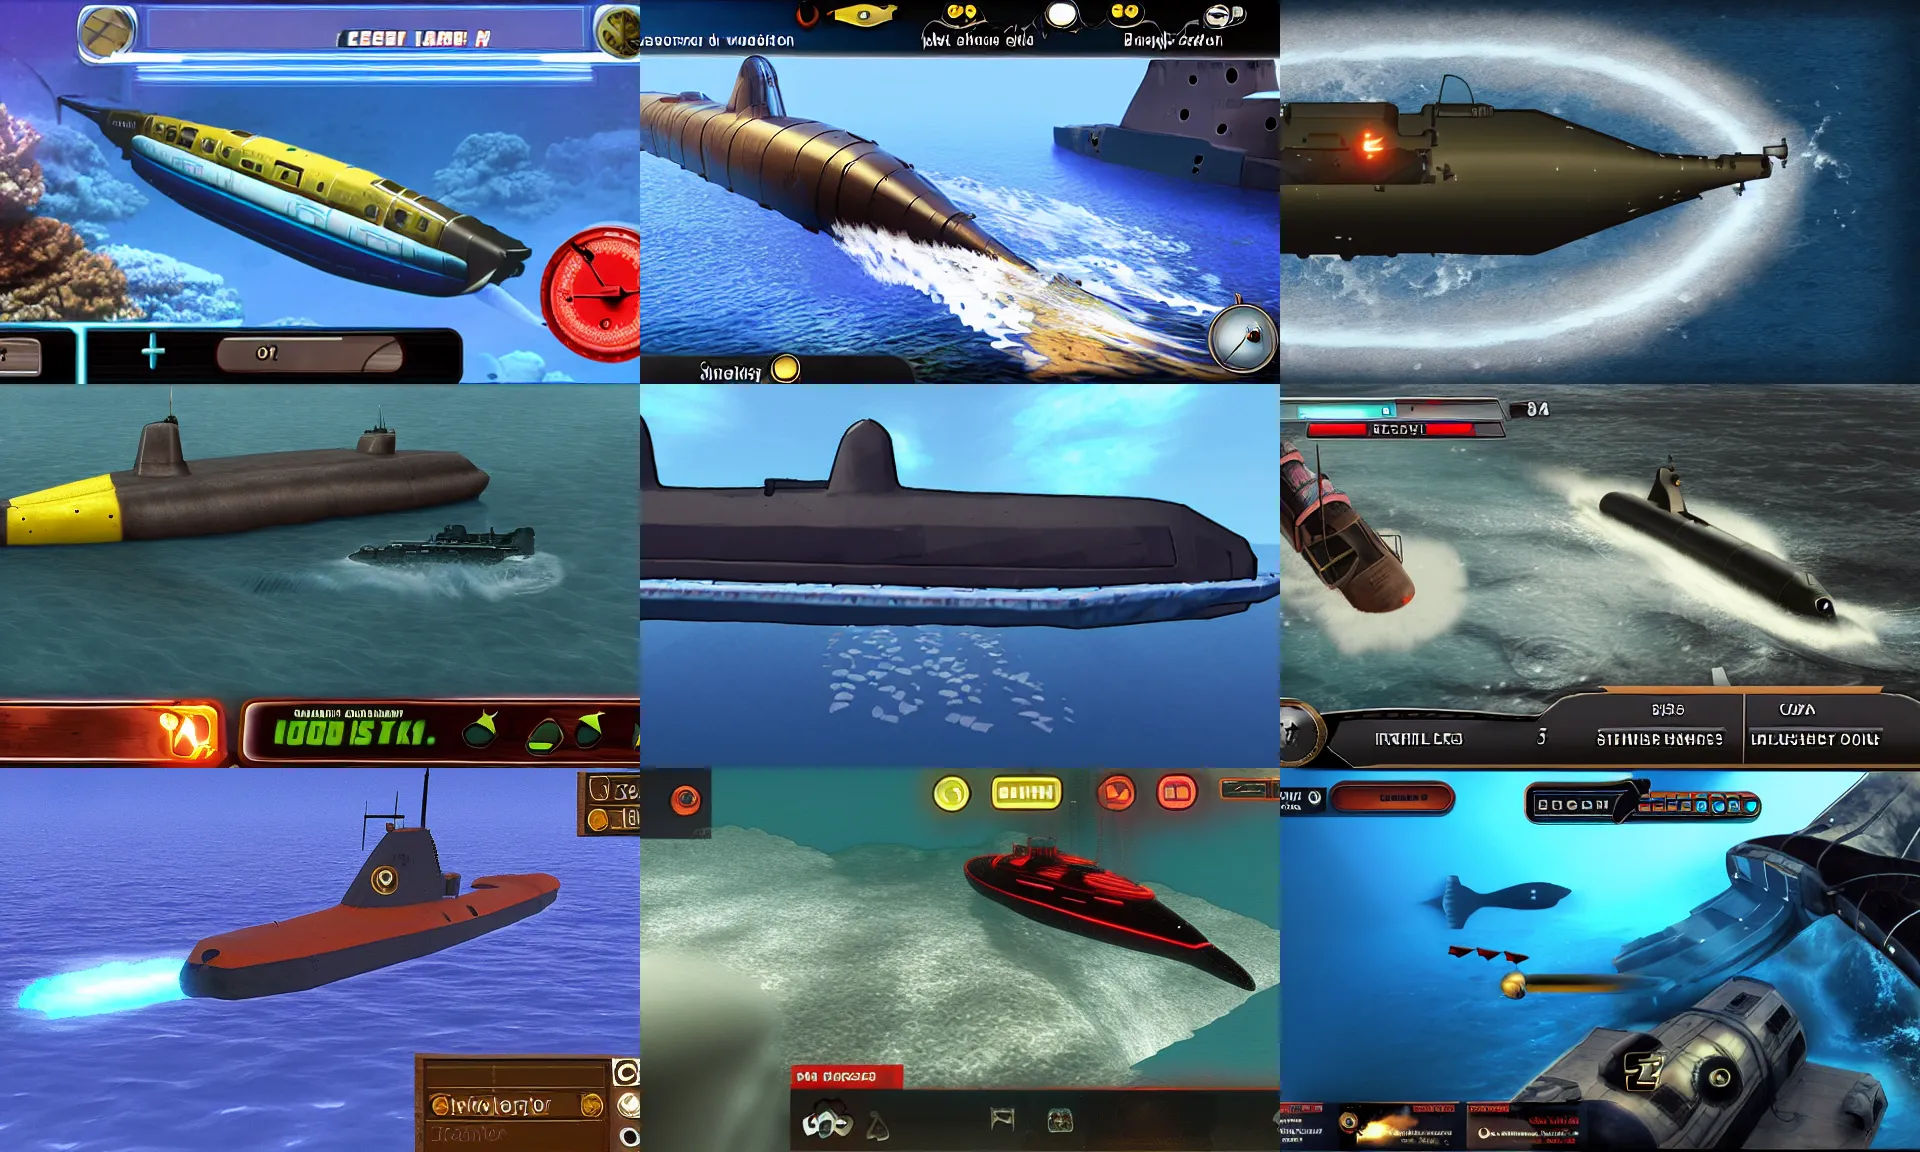 Prompt: Submarine, screenshot from 'Silent Hunter 5'